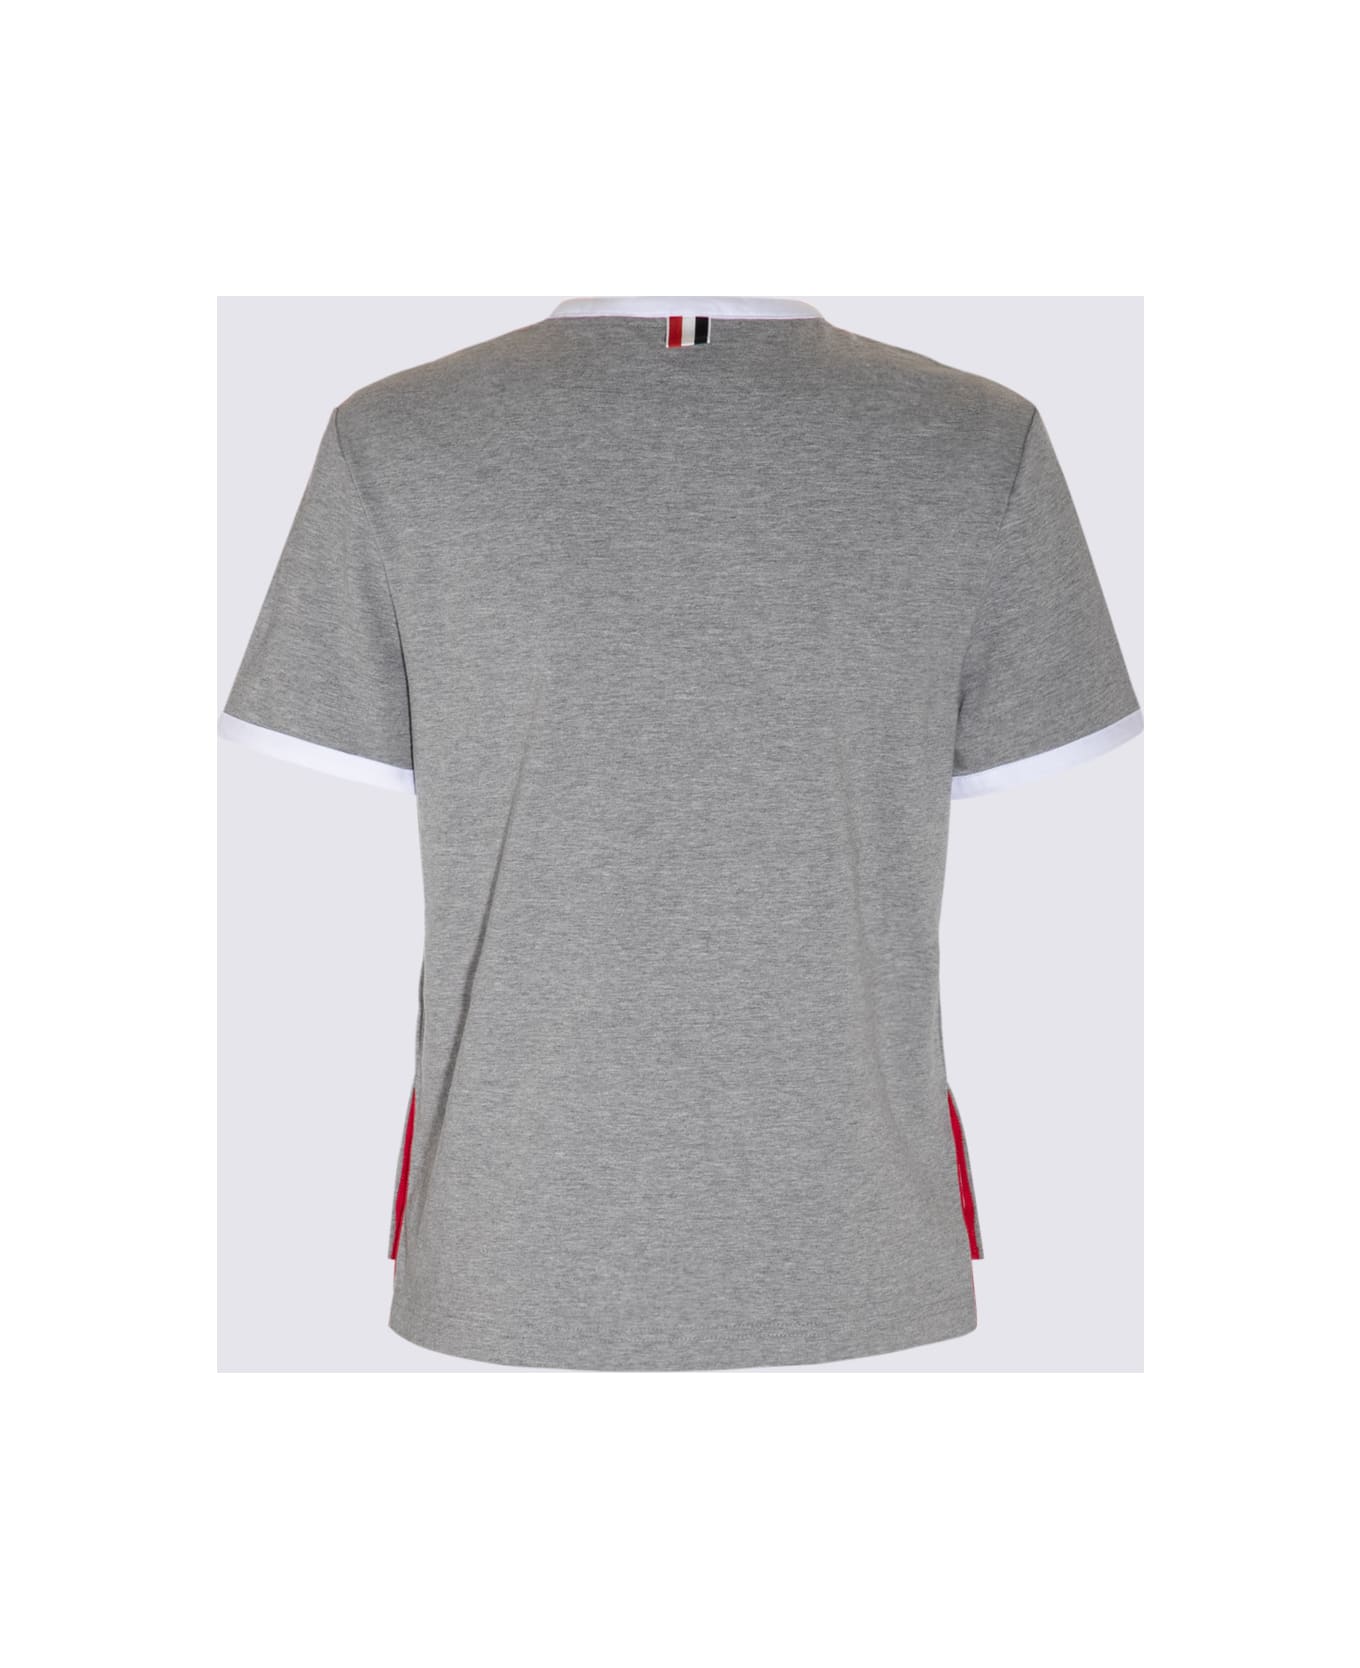 Thom Browne Light Grey Cotton T-shirt - LT GREY